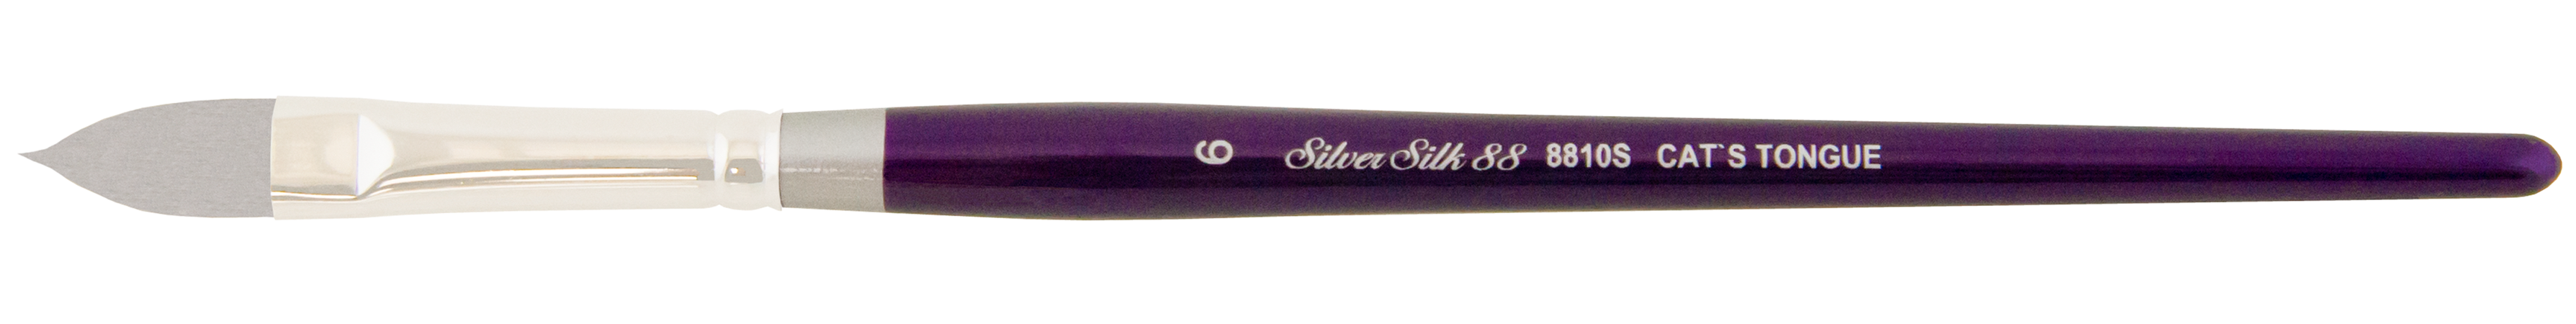 Silver Brush Silver Silk 88 SH 8810S Cats Tongue